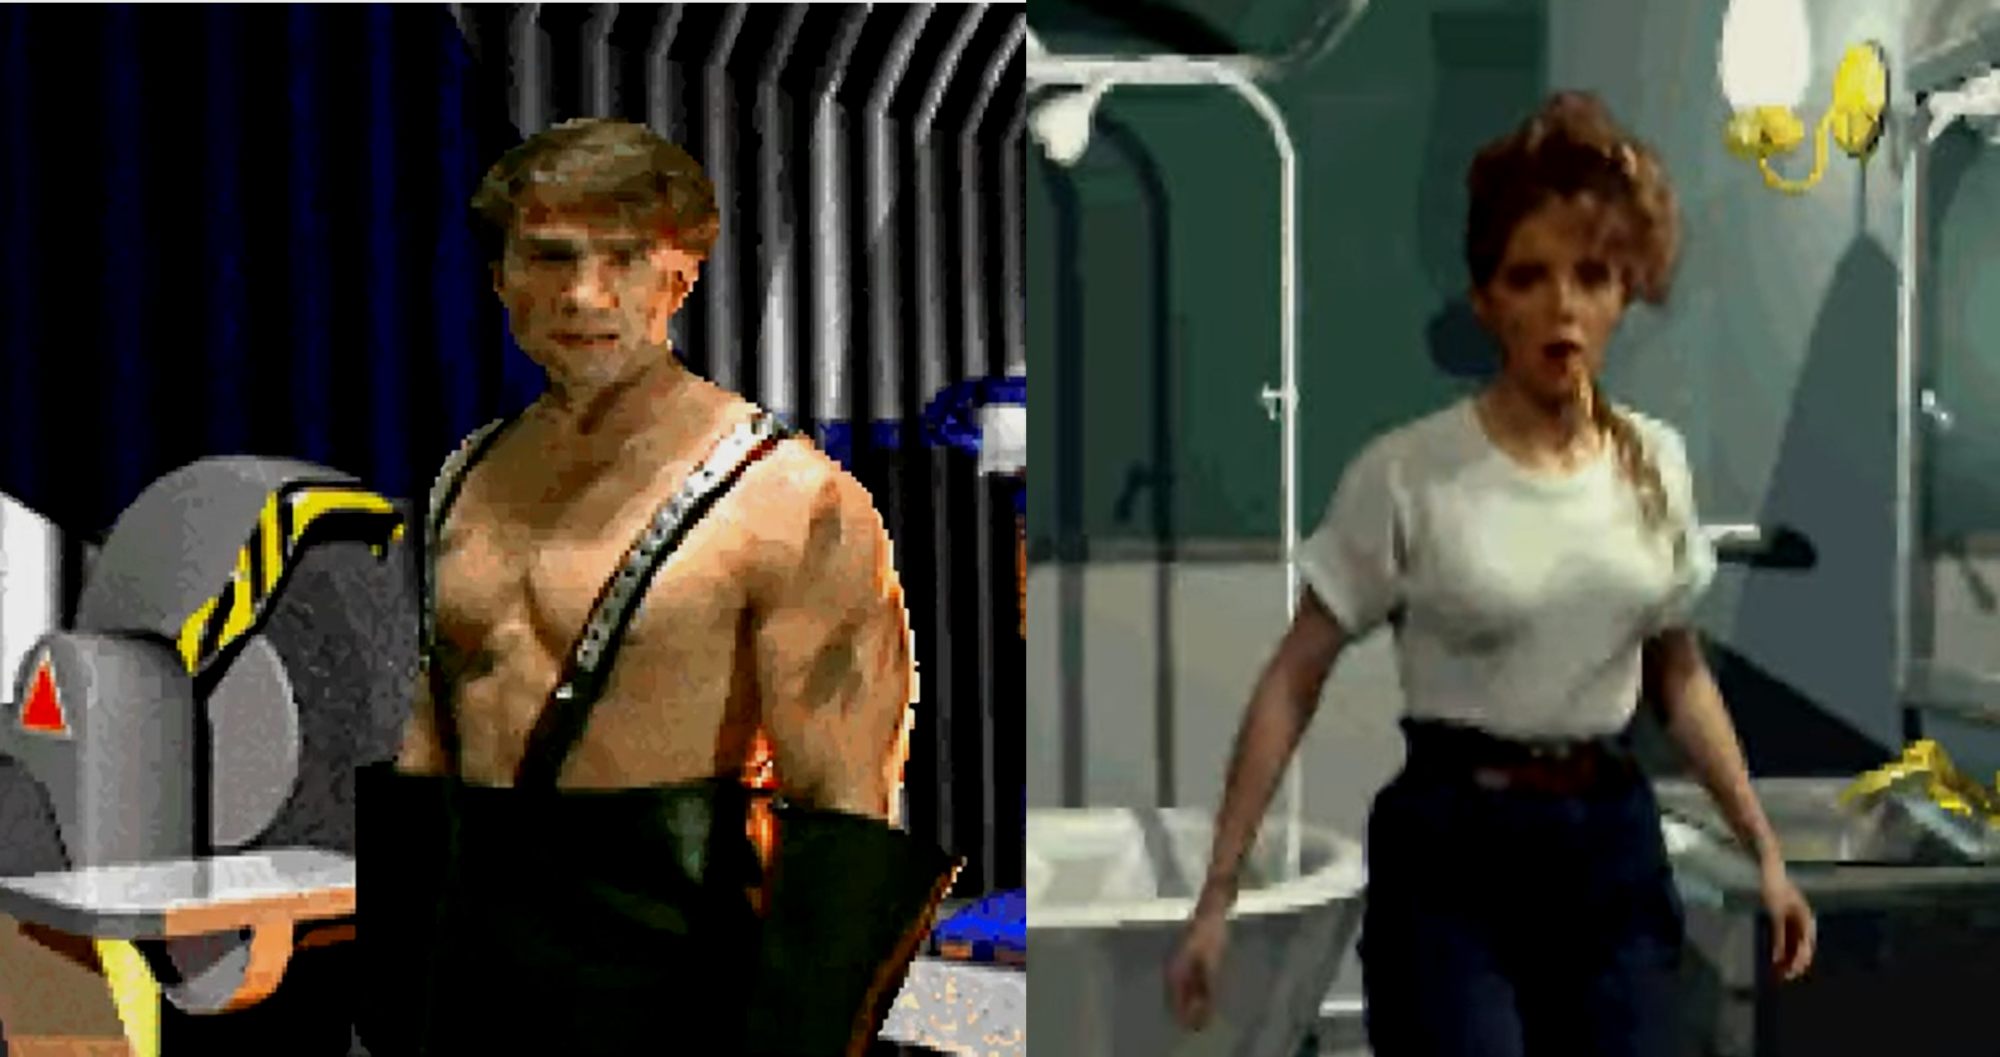 《Return to Zork》，我知道你们在想什么，但左边是个BlackSmith还会帮你打一把大宝剑；右边的妹子叫Rebecca，在浴室刷牙时被误入的主角撞见，下一秒就一拳让主角就地昏迷